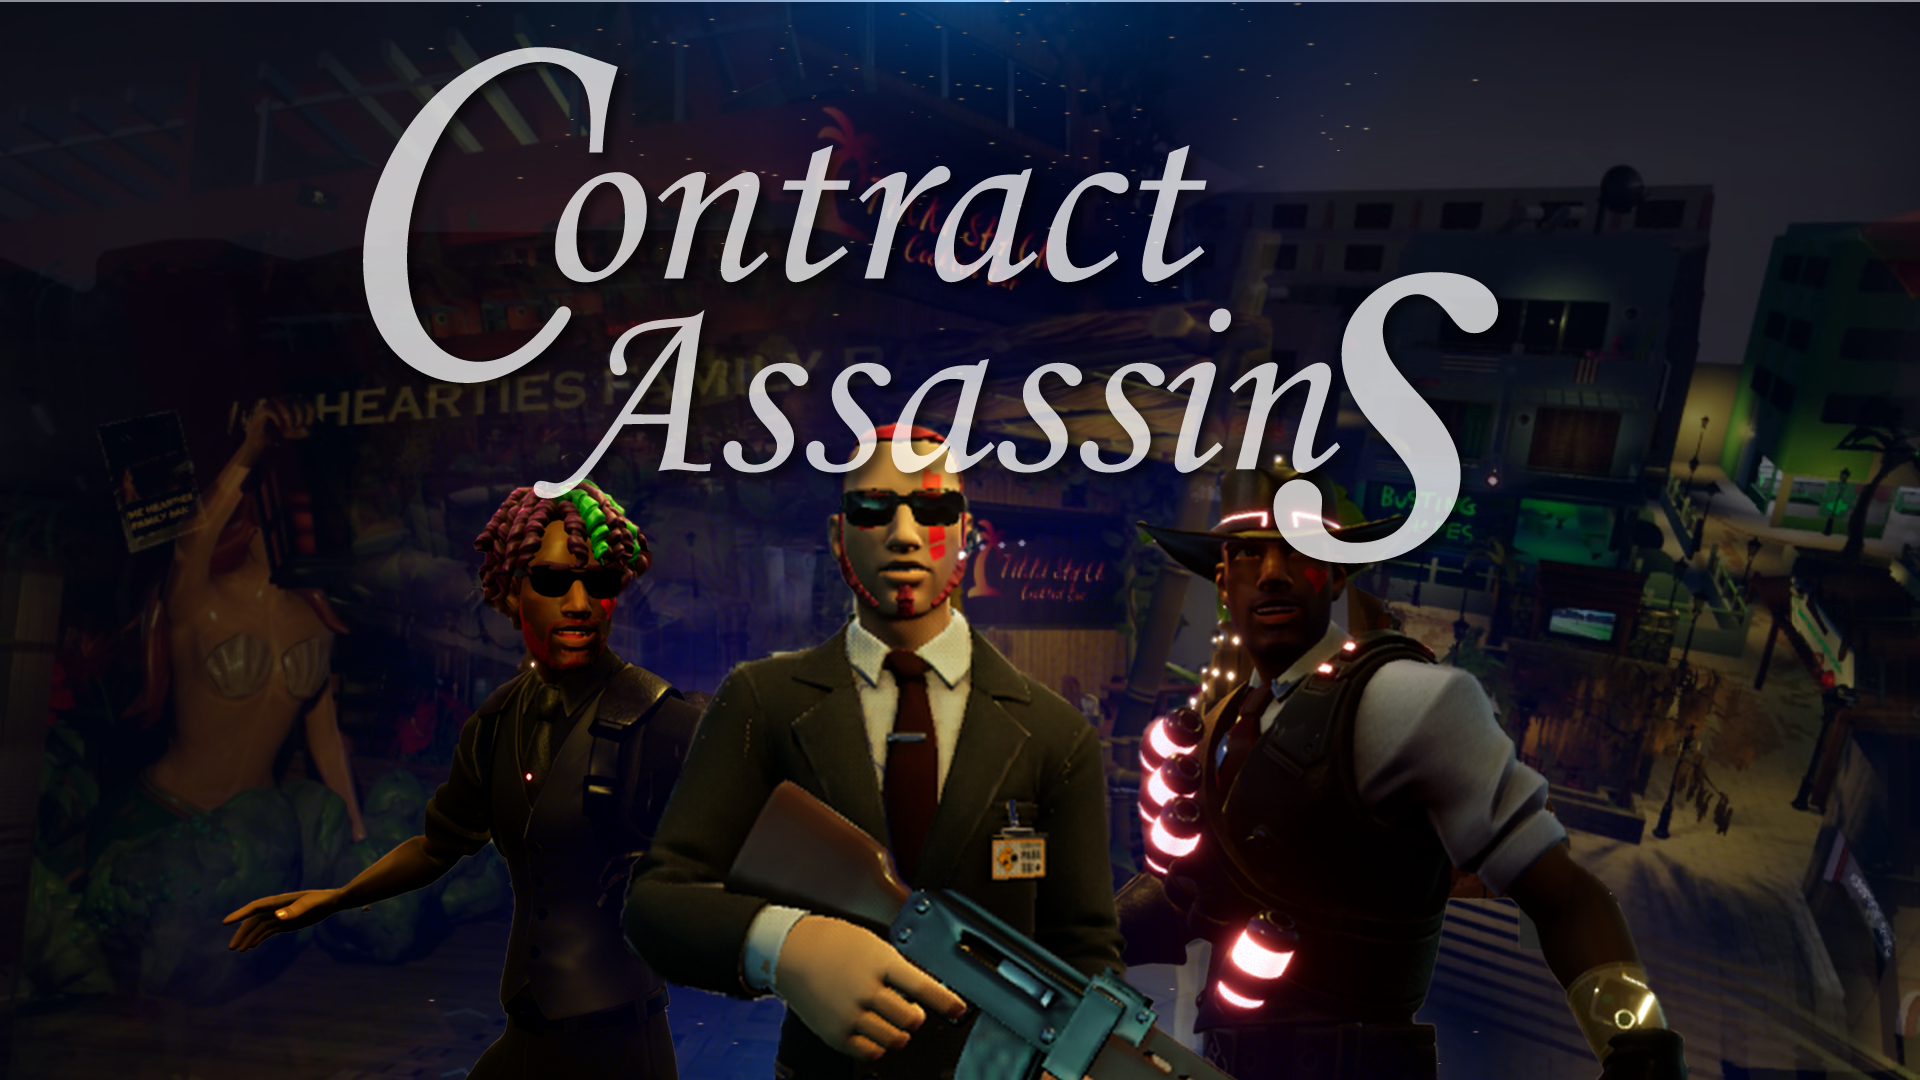 Contract Assassins